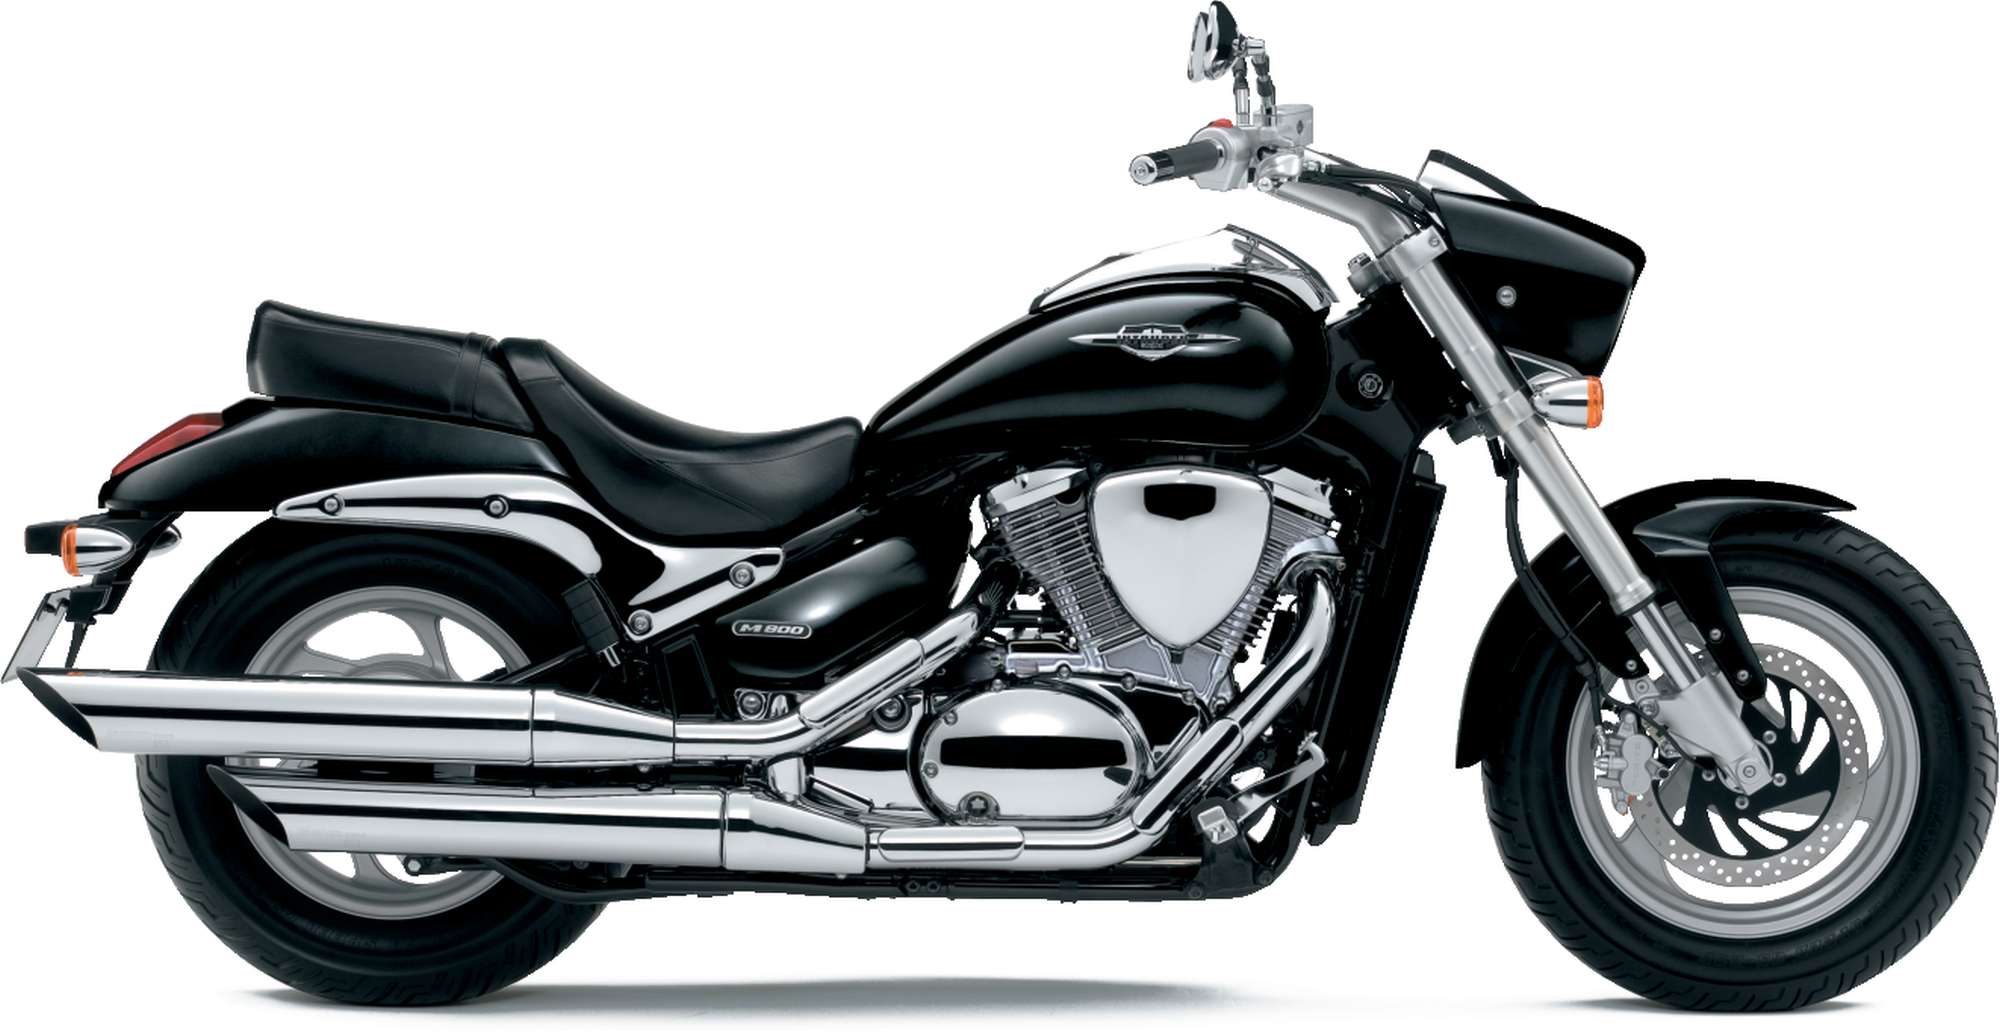 Мотоцикл GSX400 Inazuma 2001 технические характеристики фото видео